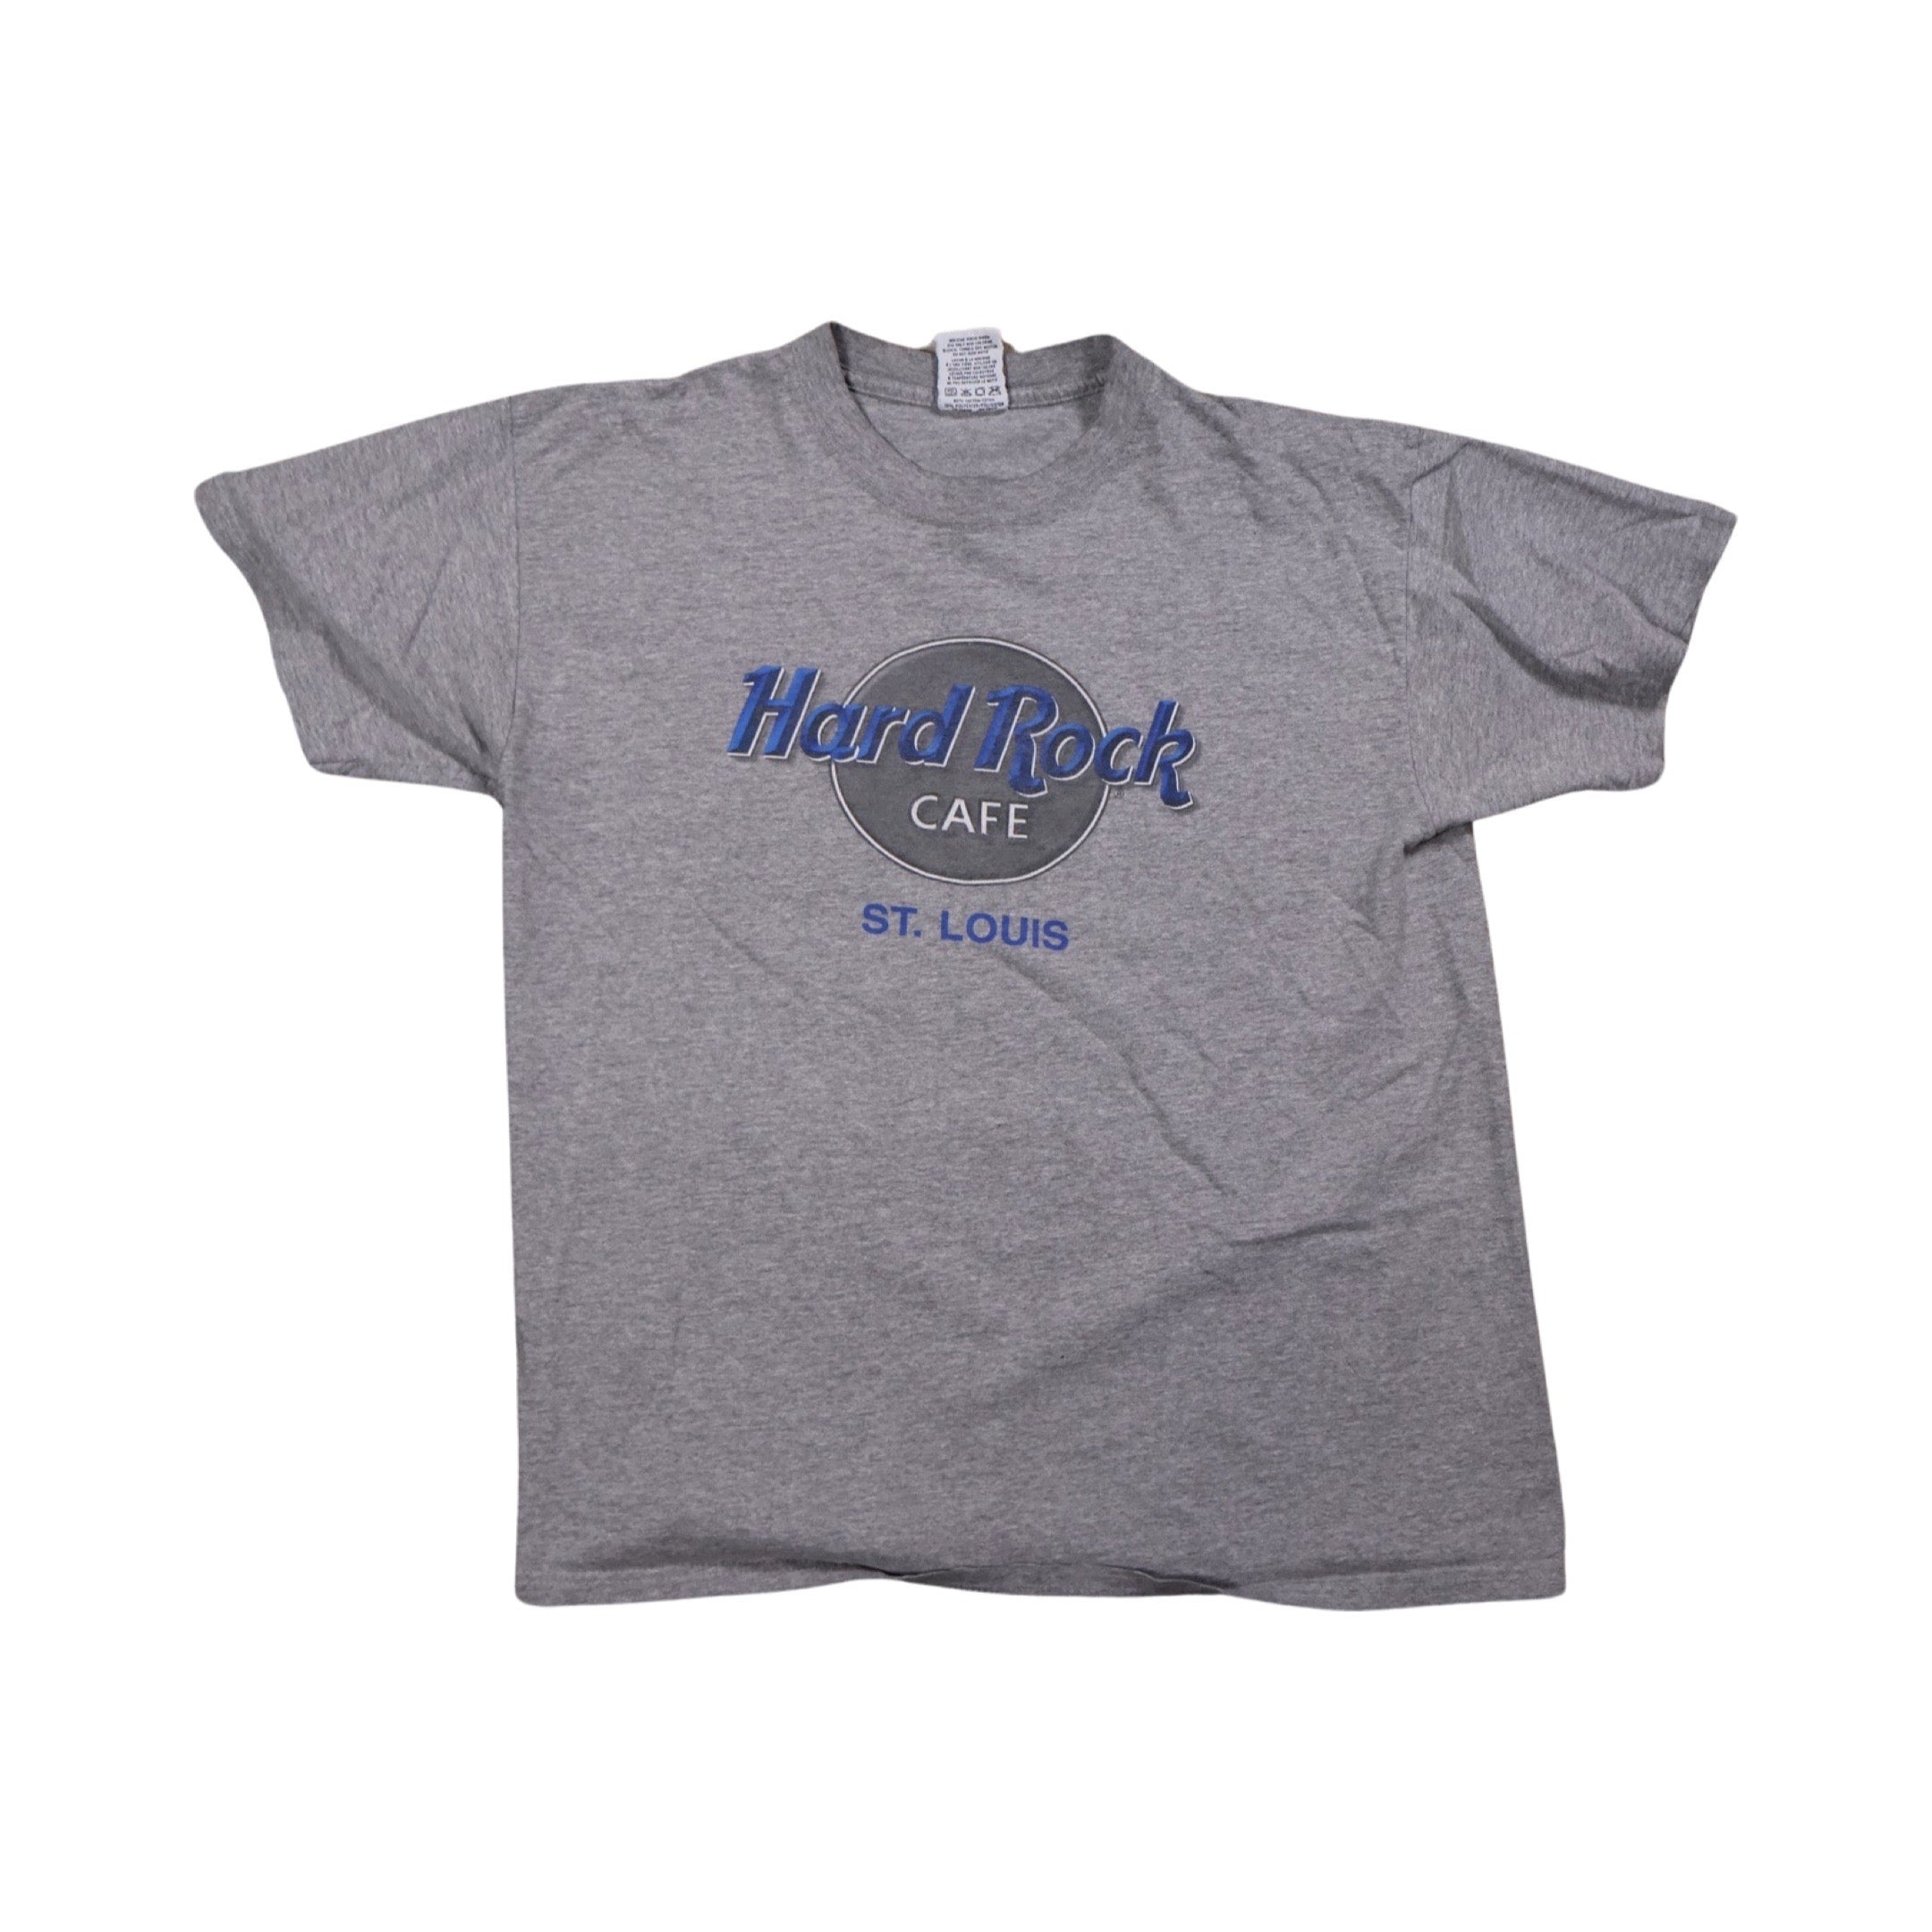 Hard Rock Cafe St. Louis 90s T-Shirt (Large)